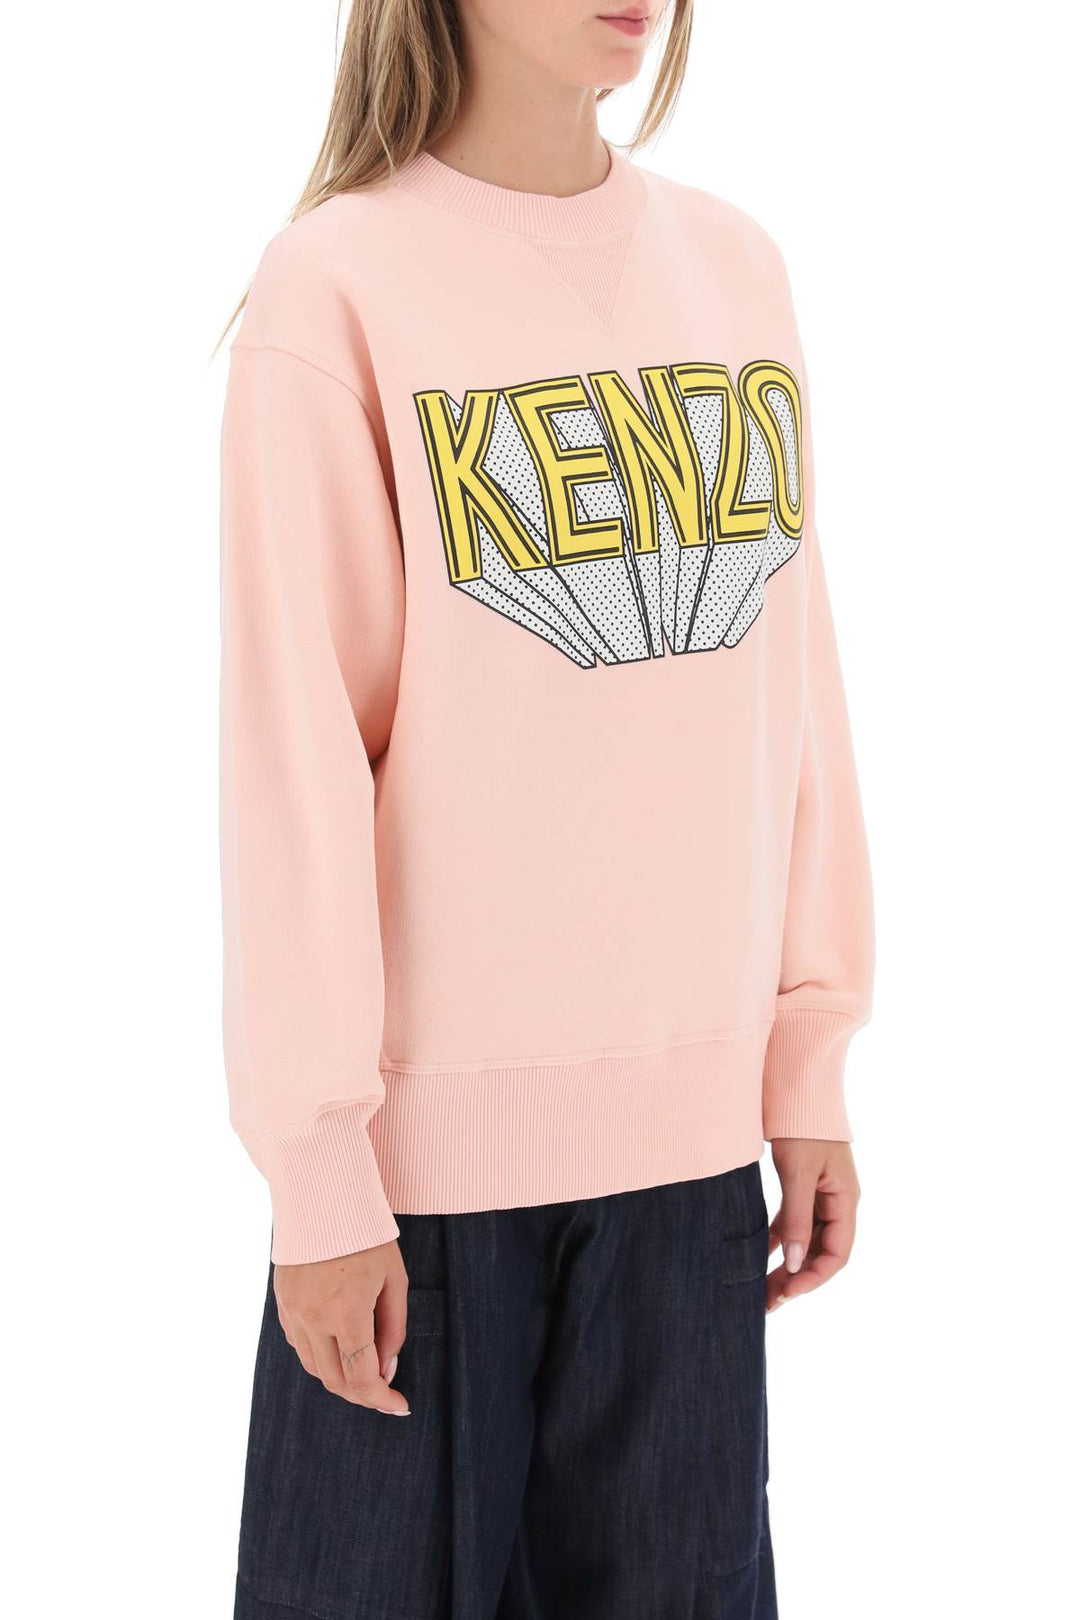 Kenzo 3d Printed Crew Neck Sweatshirt   Rosa